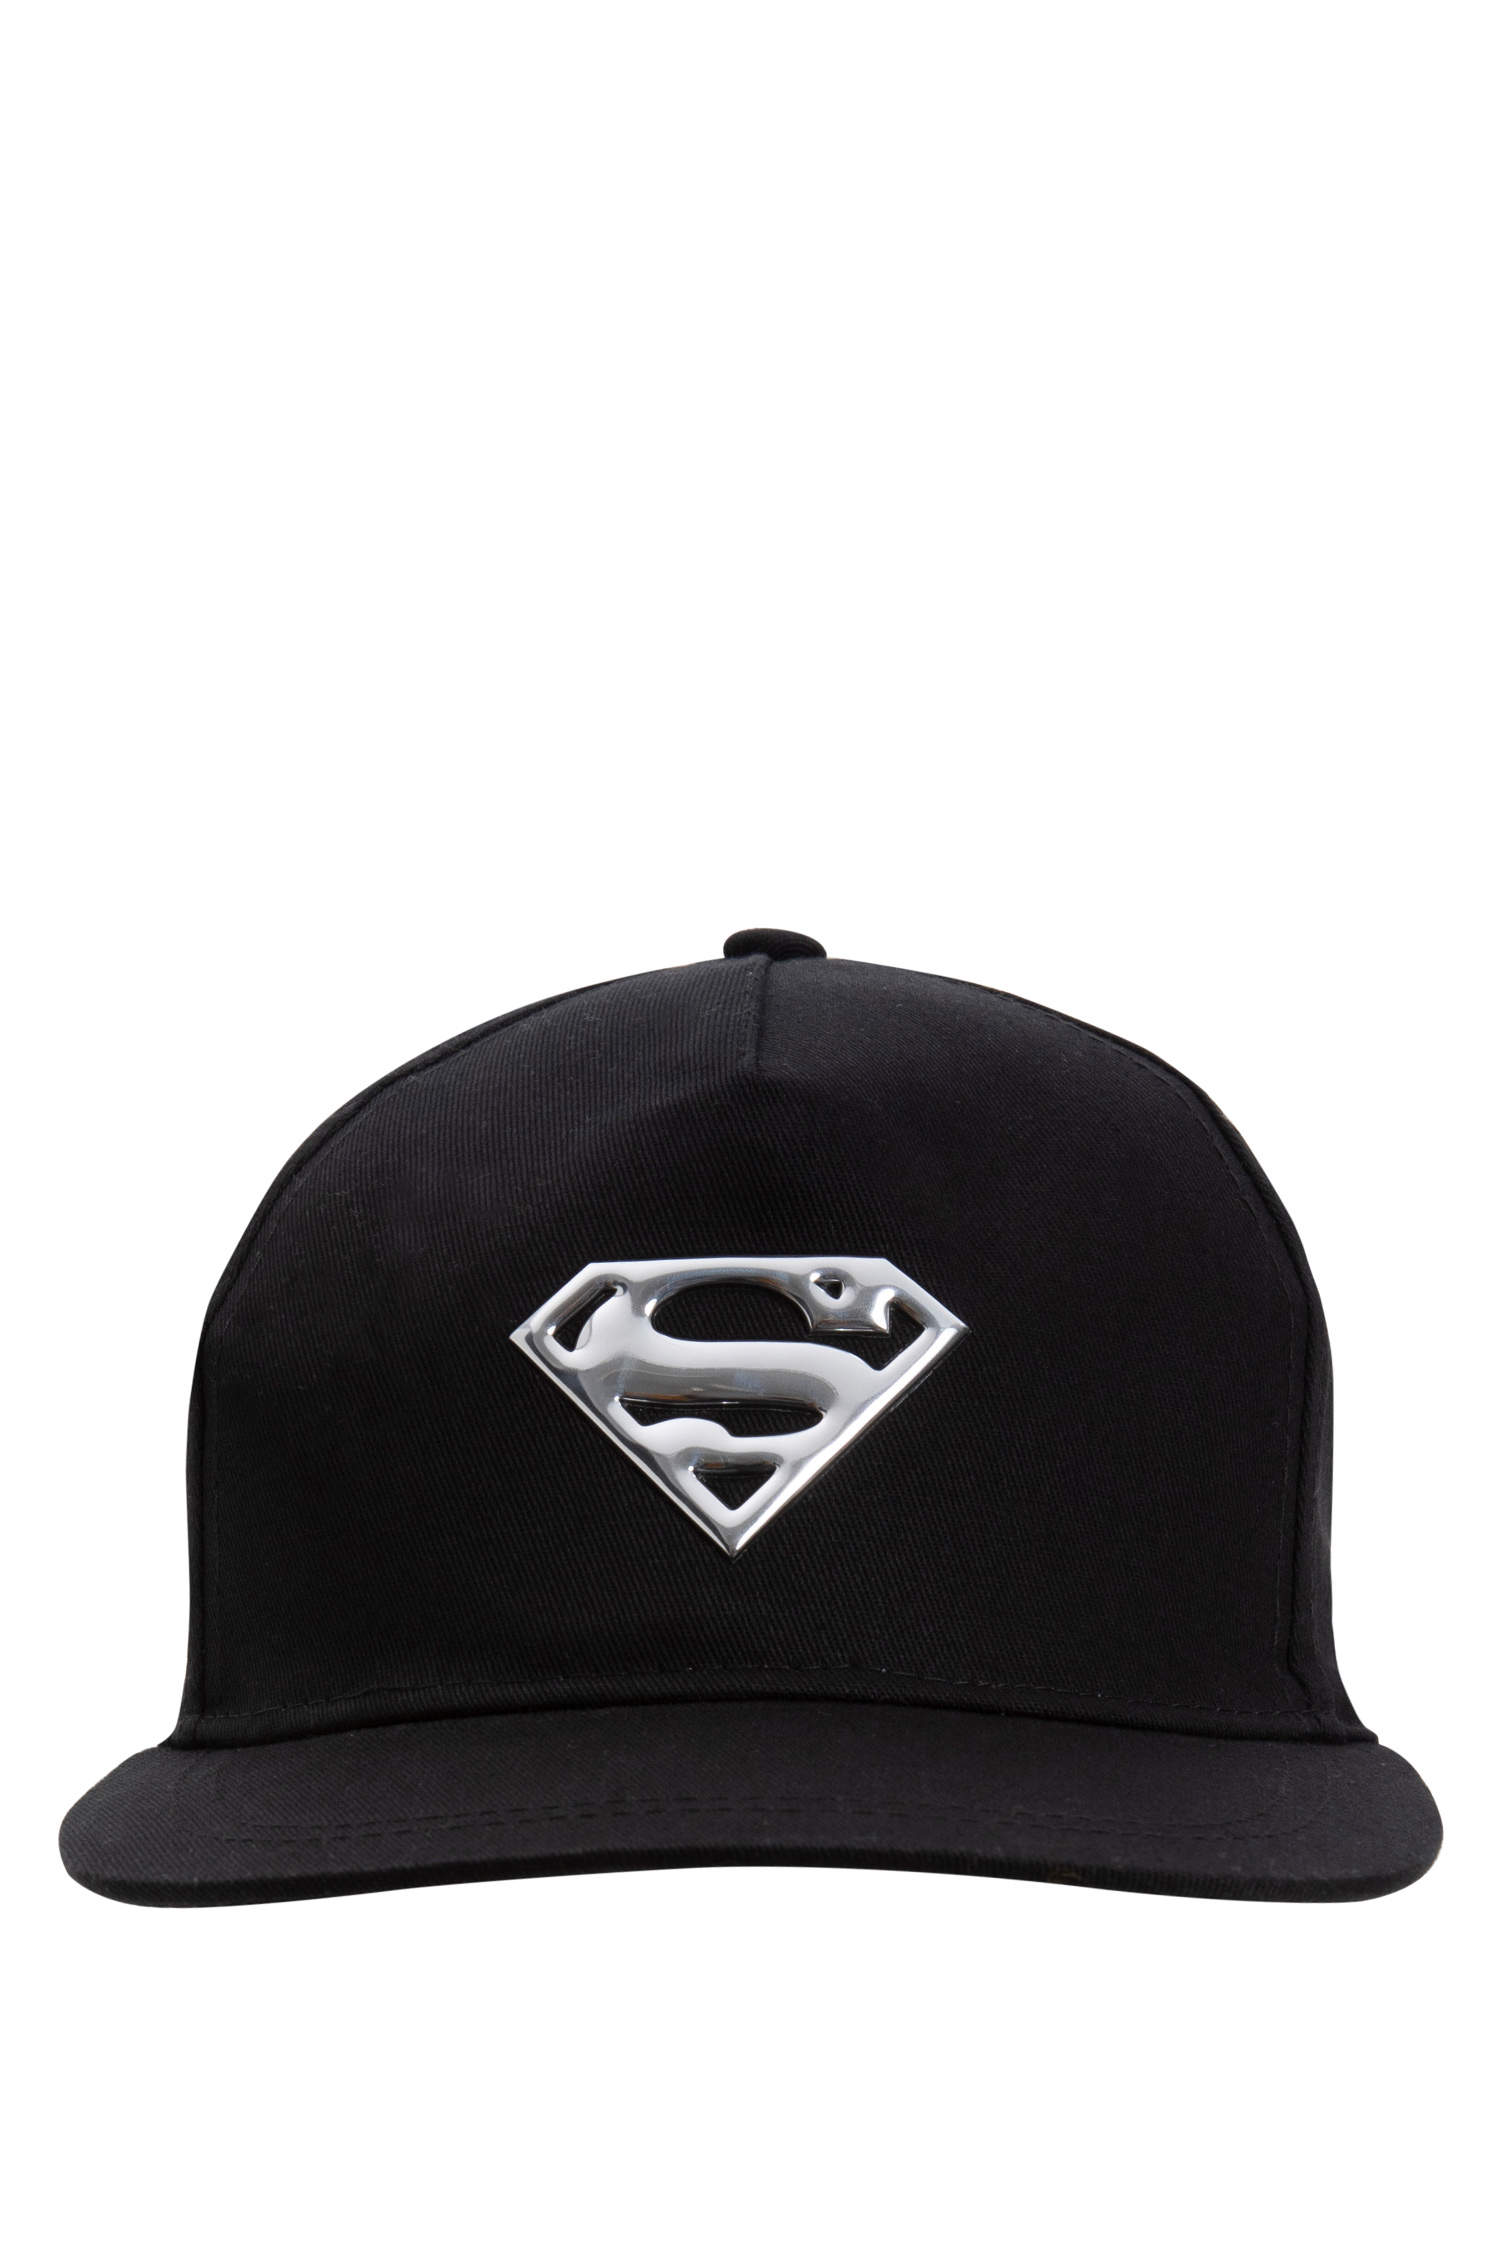 Superman Şapka